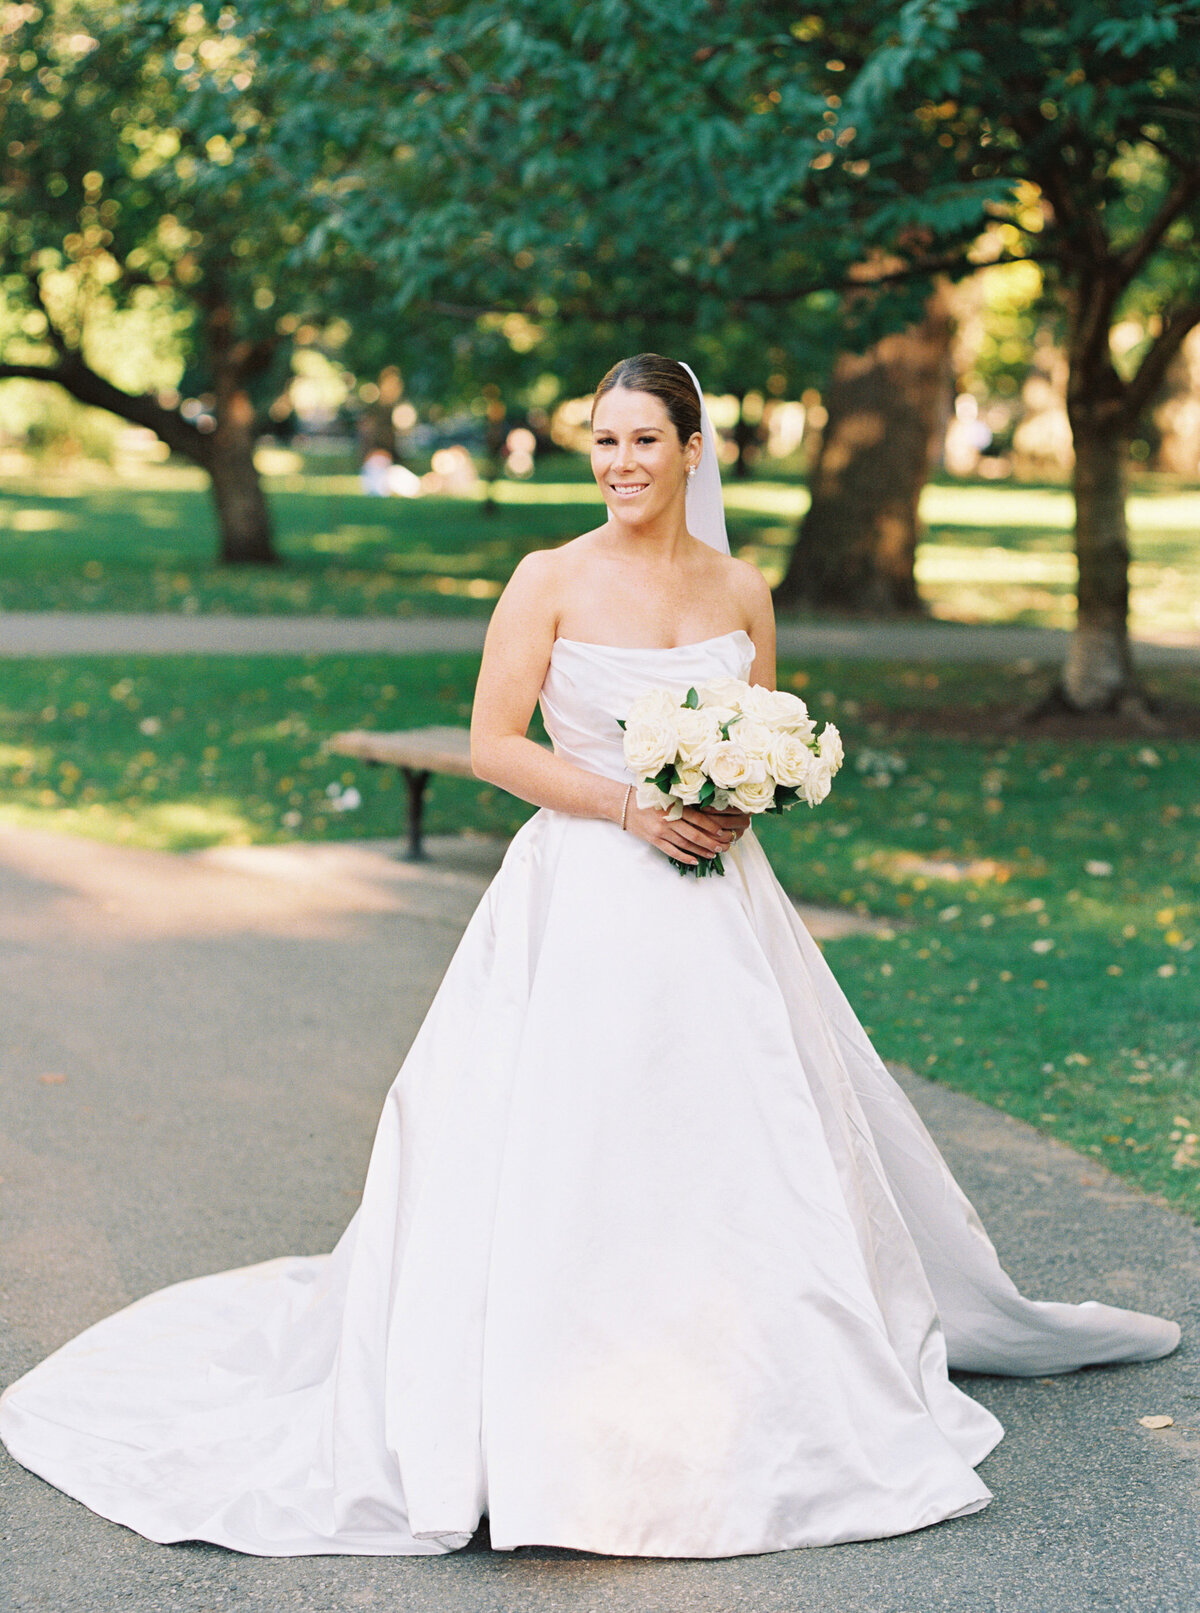 Kate-Murtaugh-Events-bride-bouquet-white-roses-Boston-Public-Garden